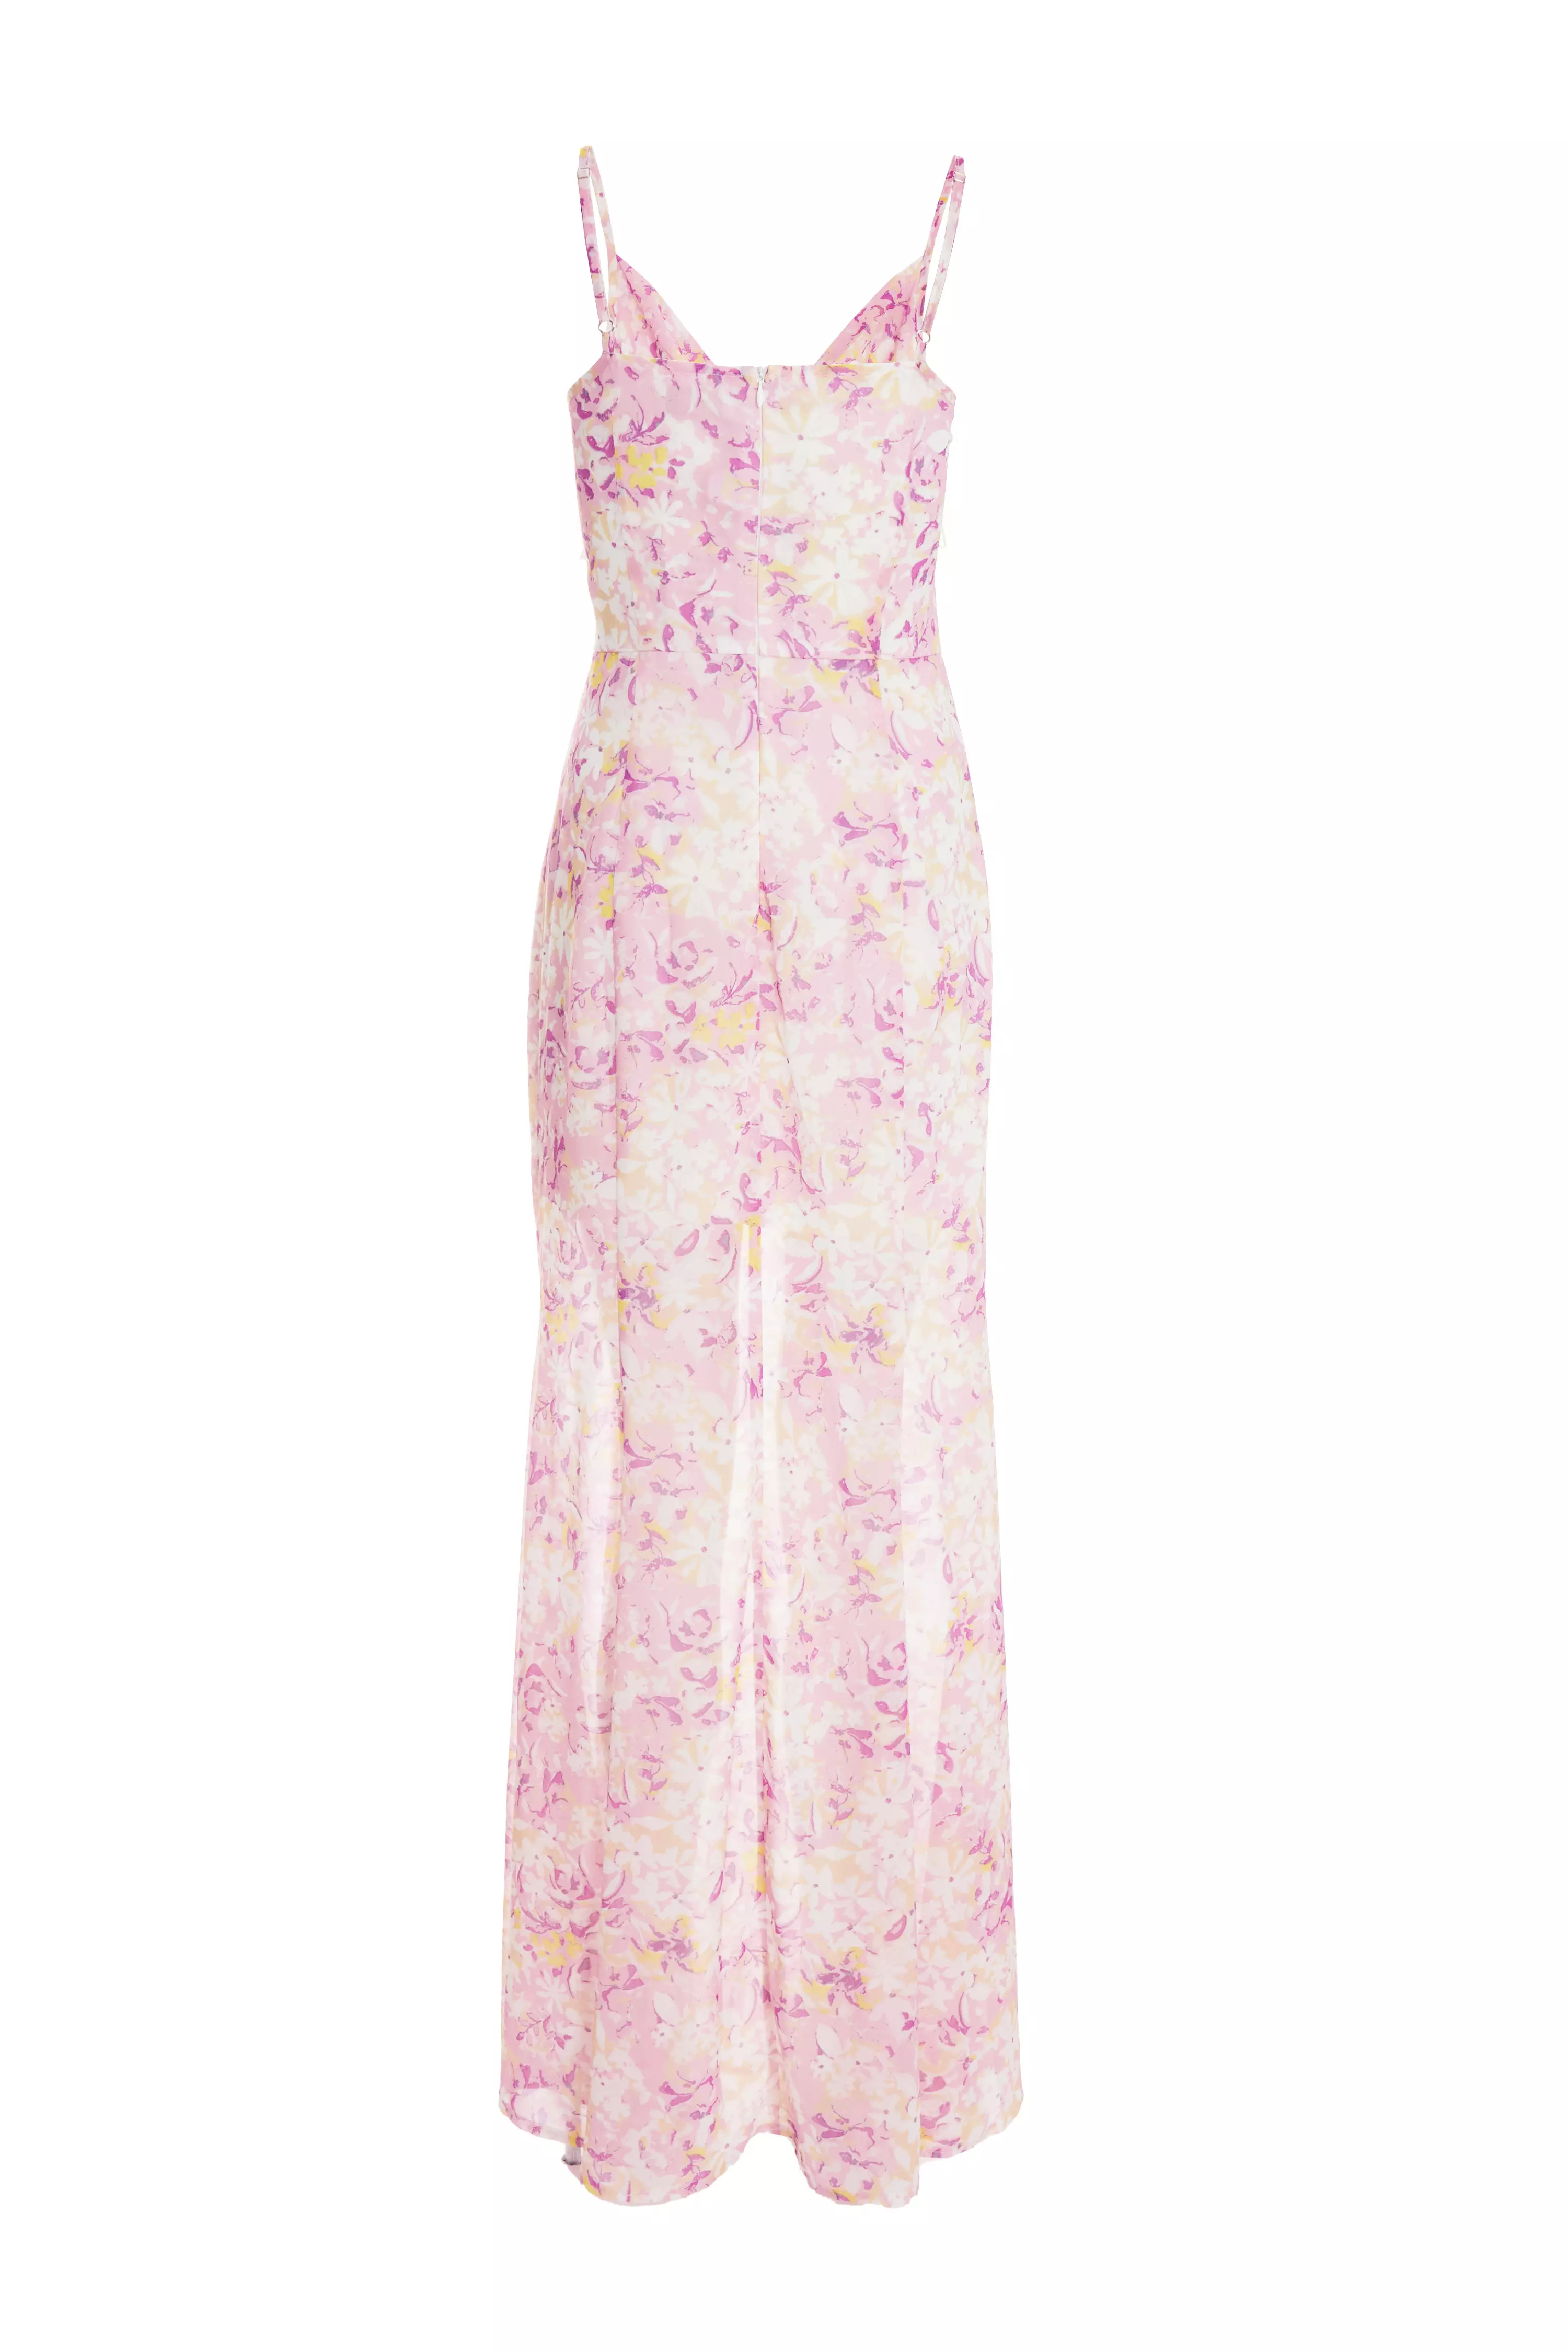 Pink Floral Mesh Maxi Dress - QUIZ Clothing